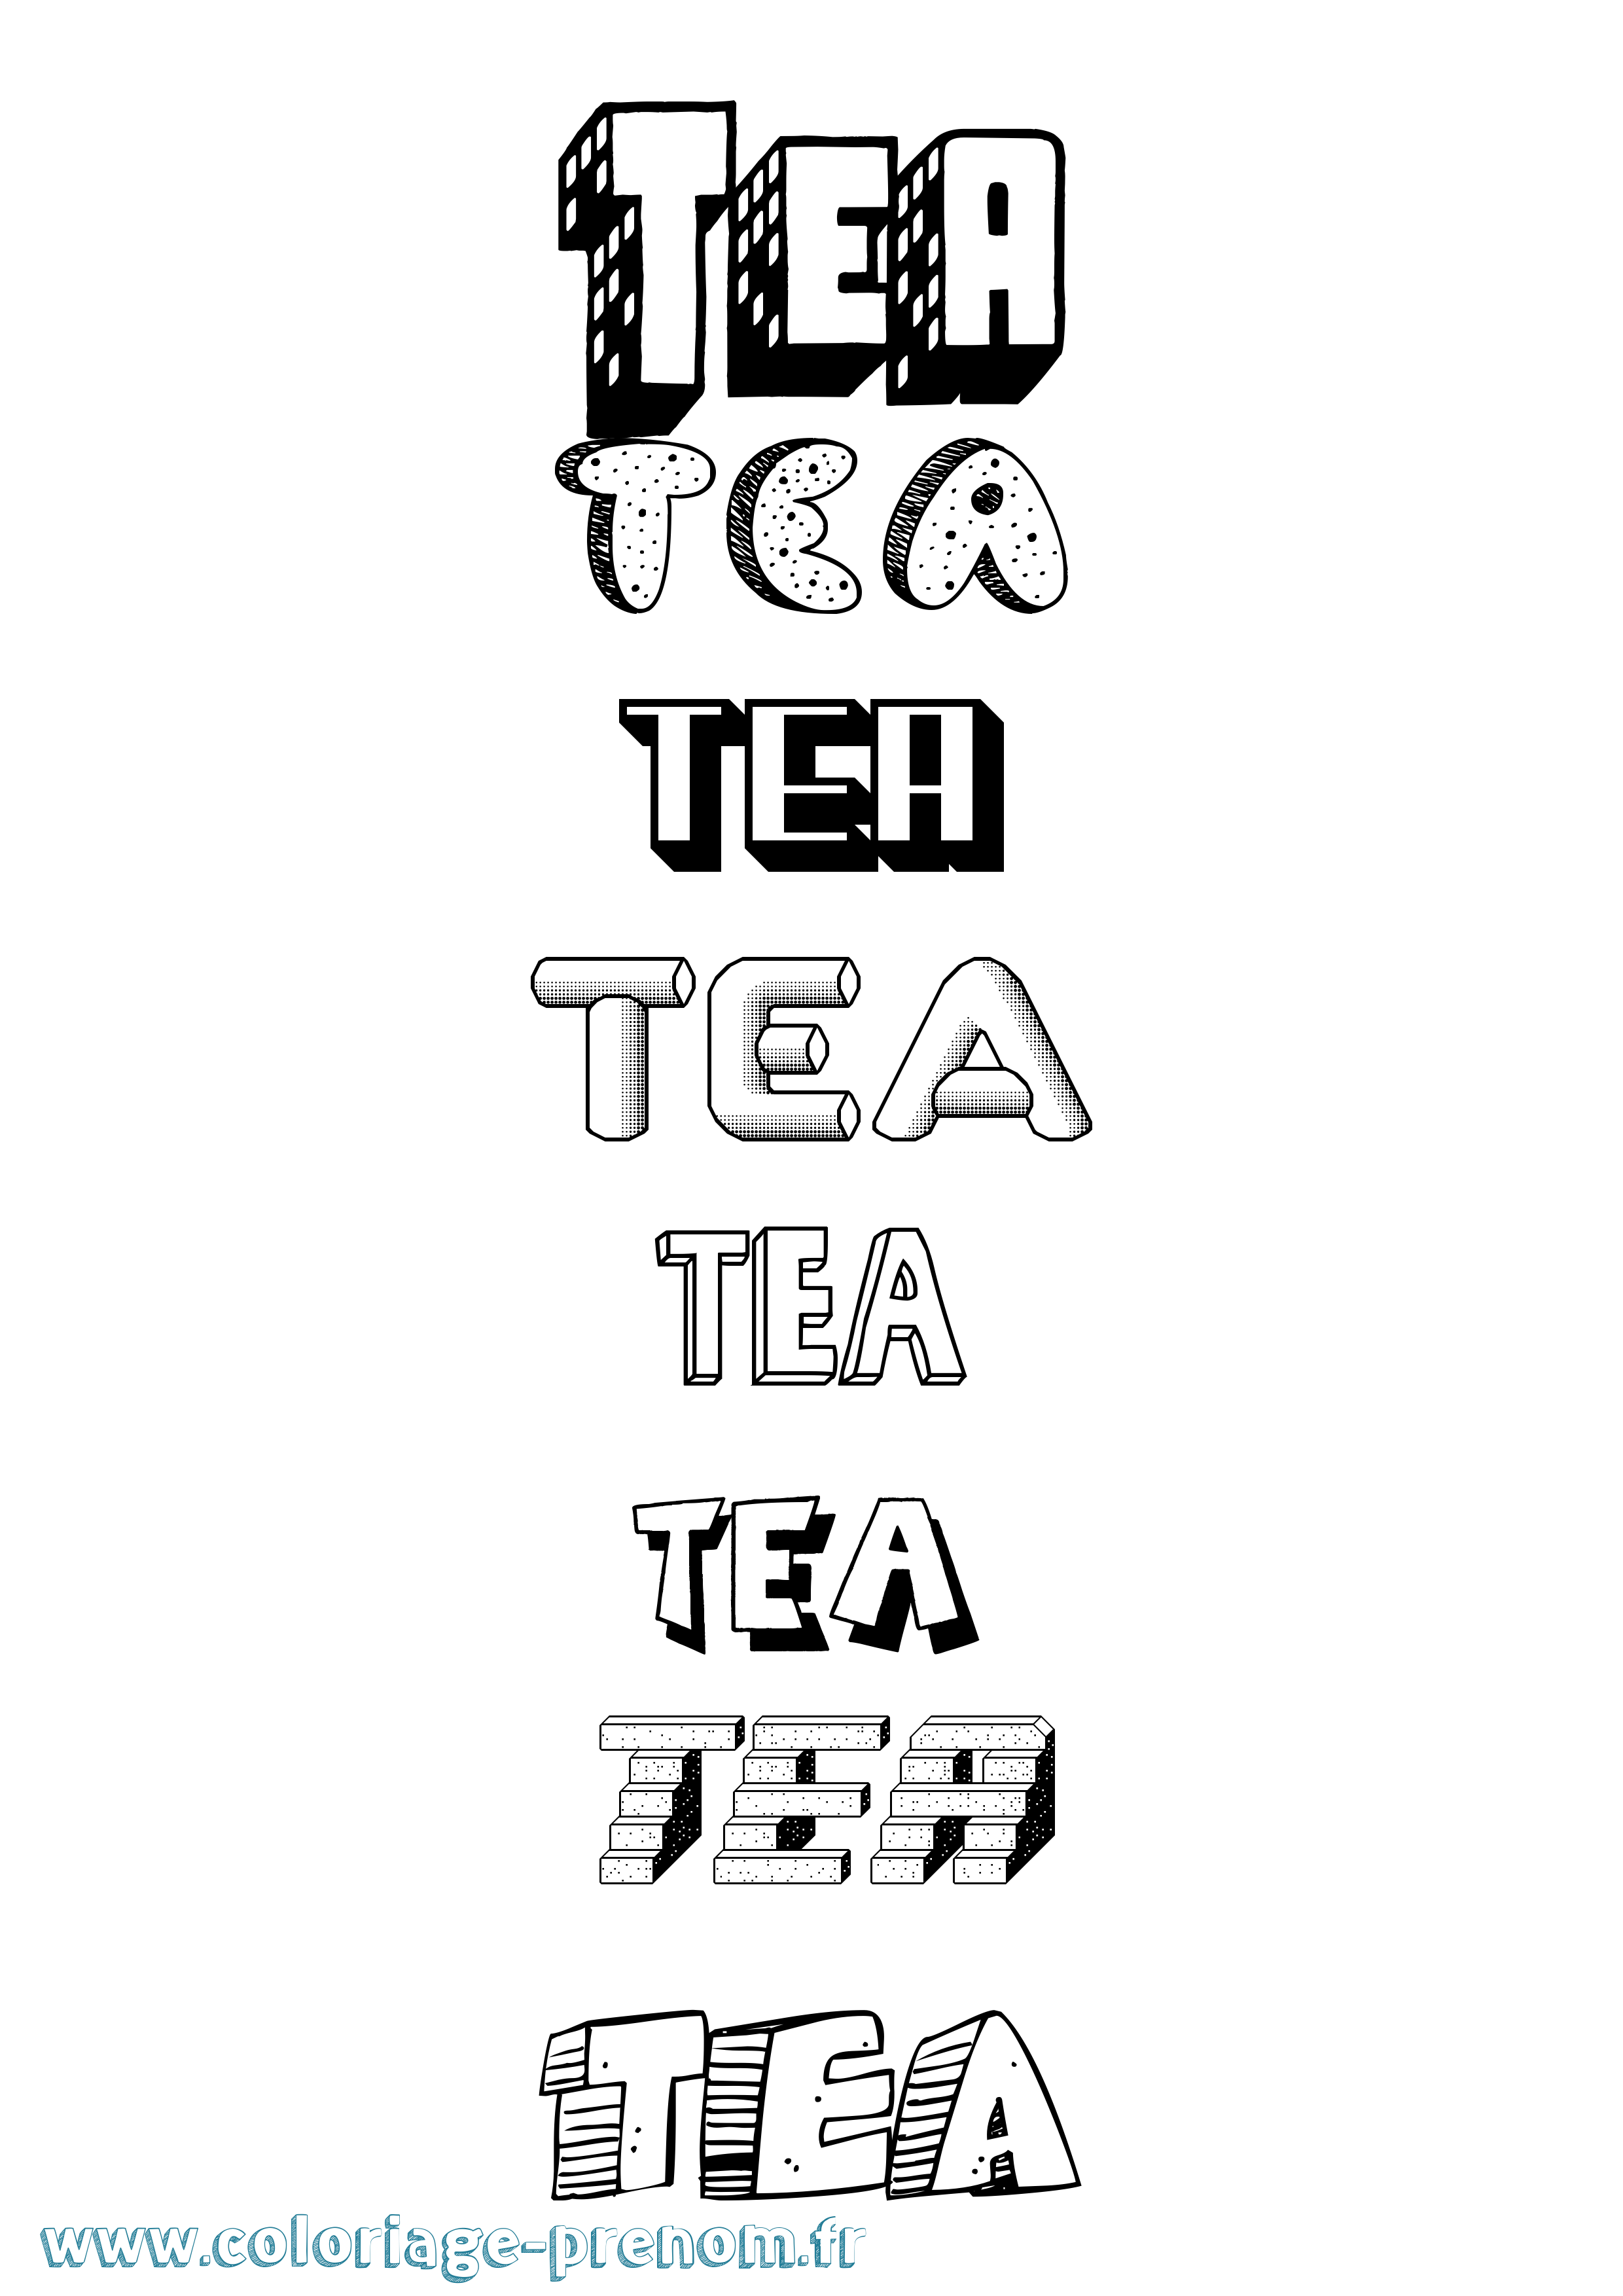 Coloriage prénom Tea Effet 3D